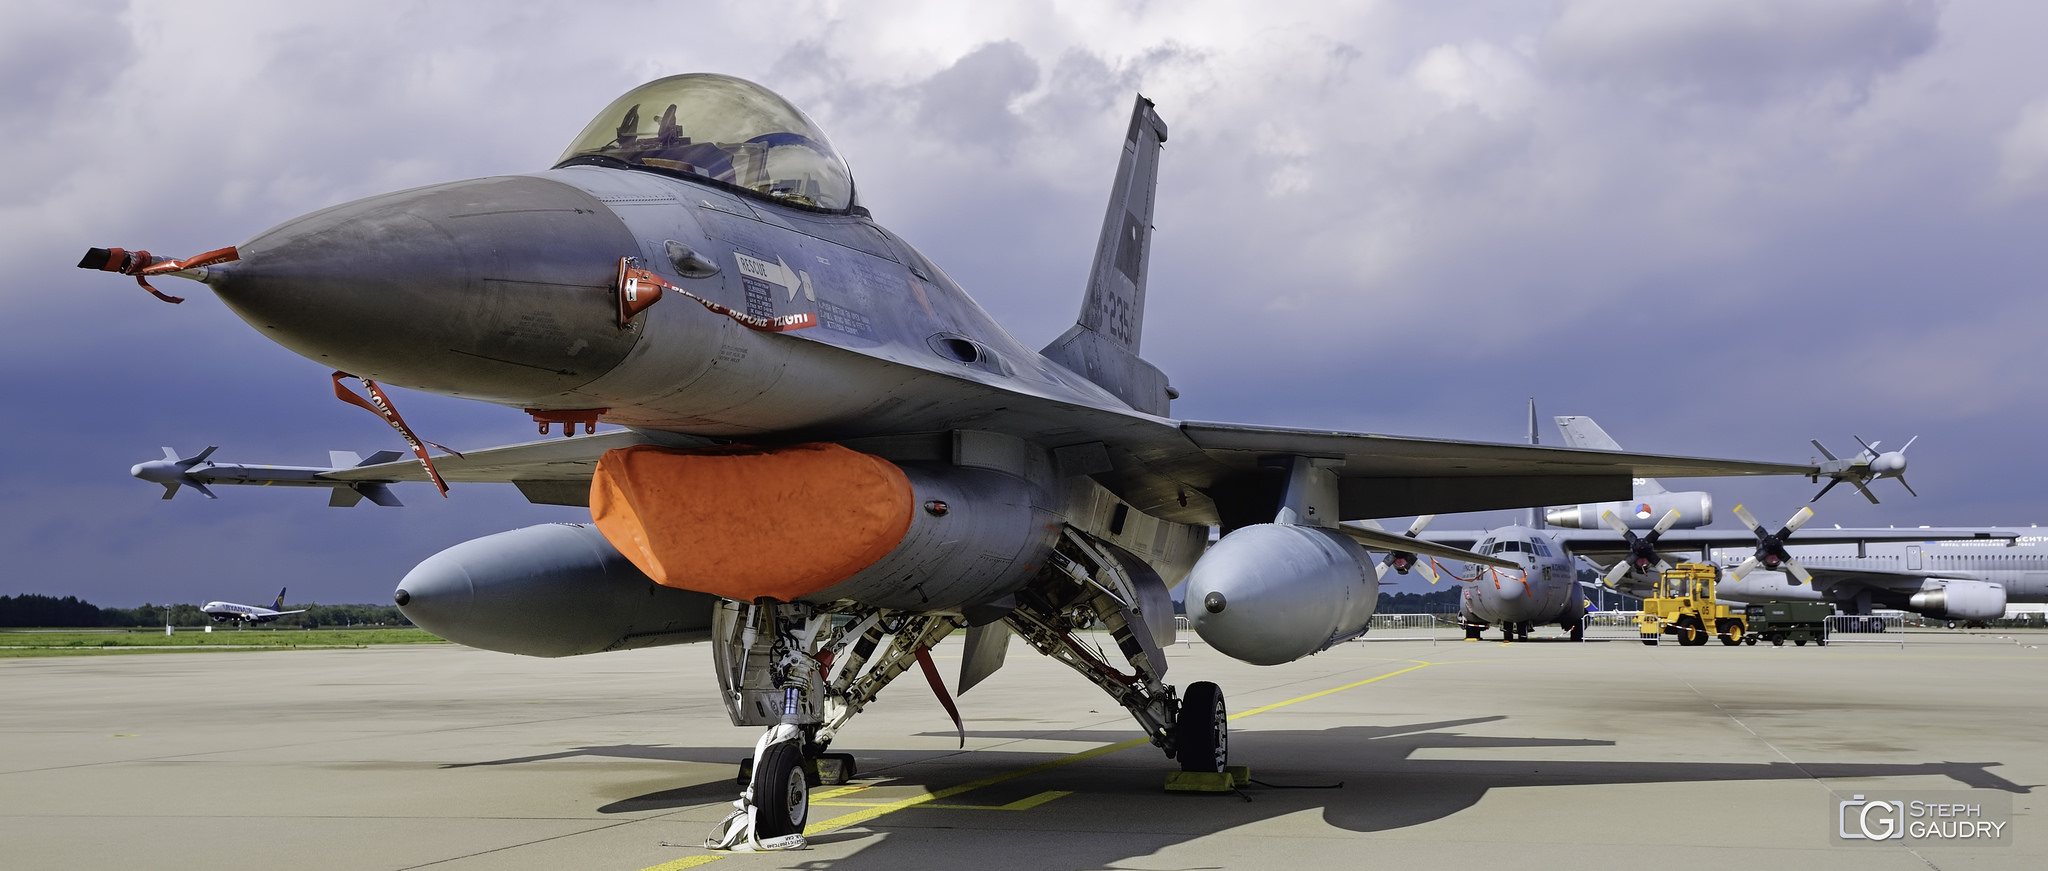 F-16 Fighting Falcon + C130 - KDC10 [Click to start slideshow]